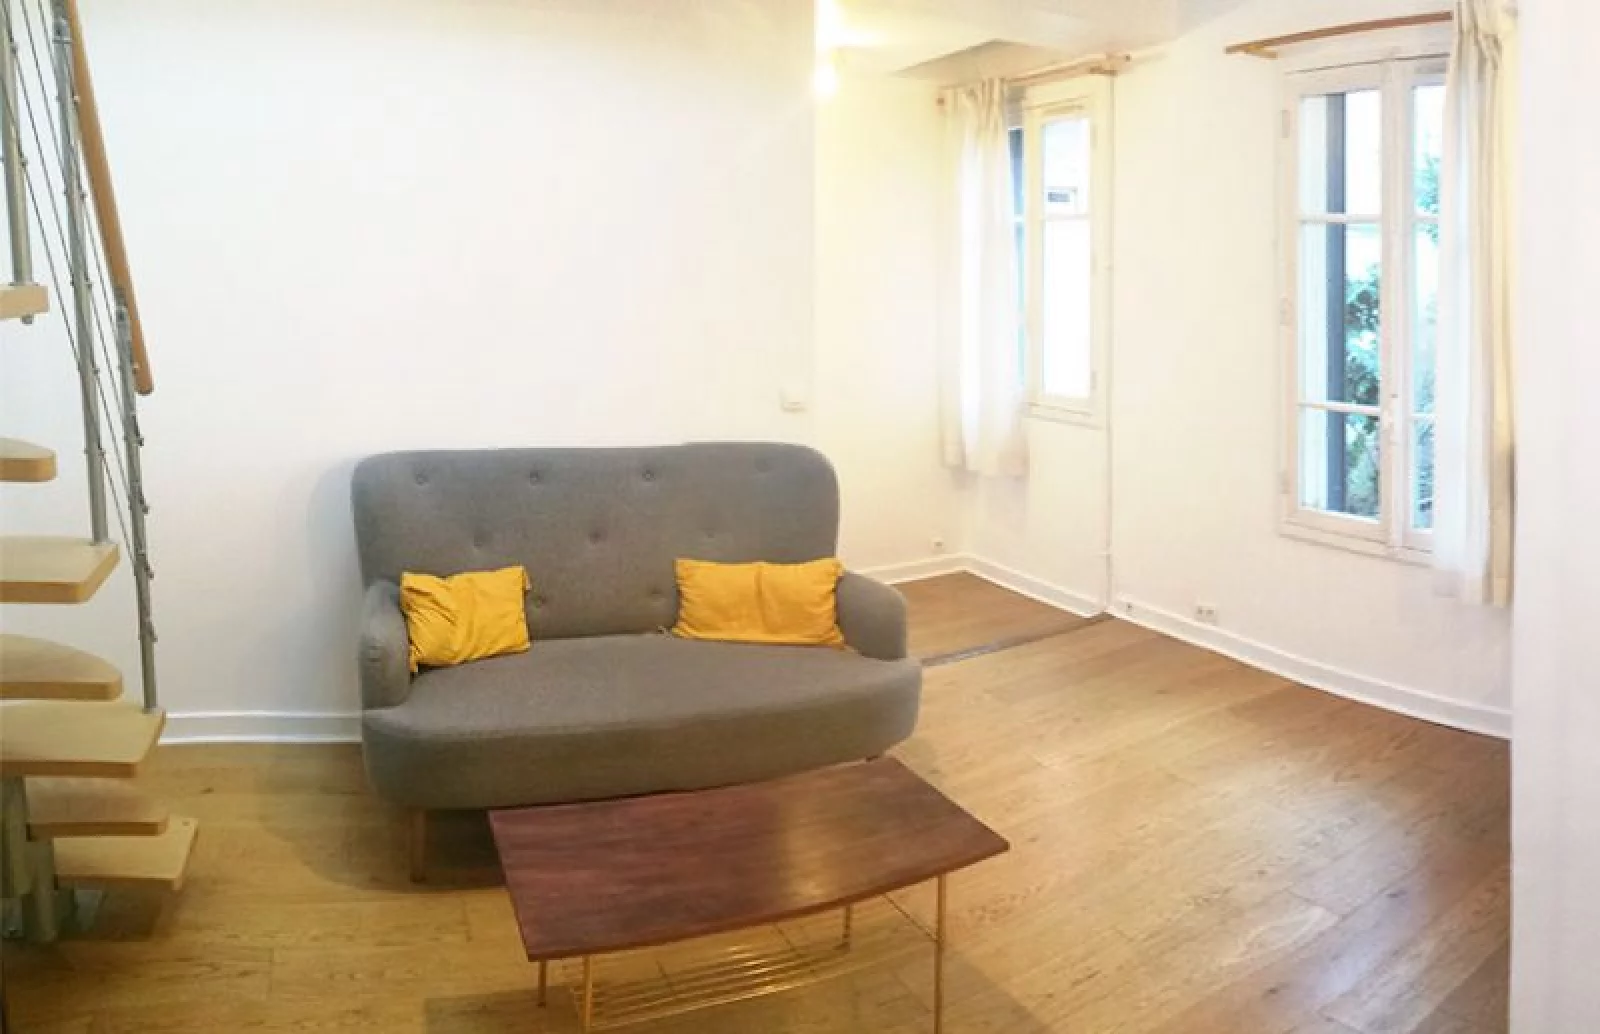 Location studio duplex meublé 22 m² (Paris 18)